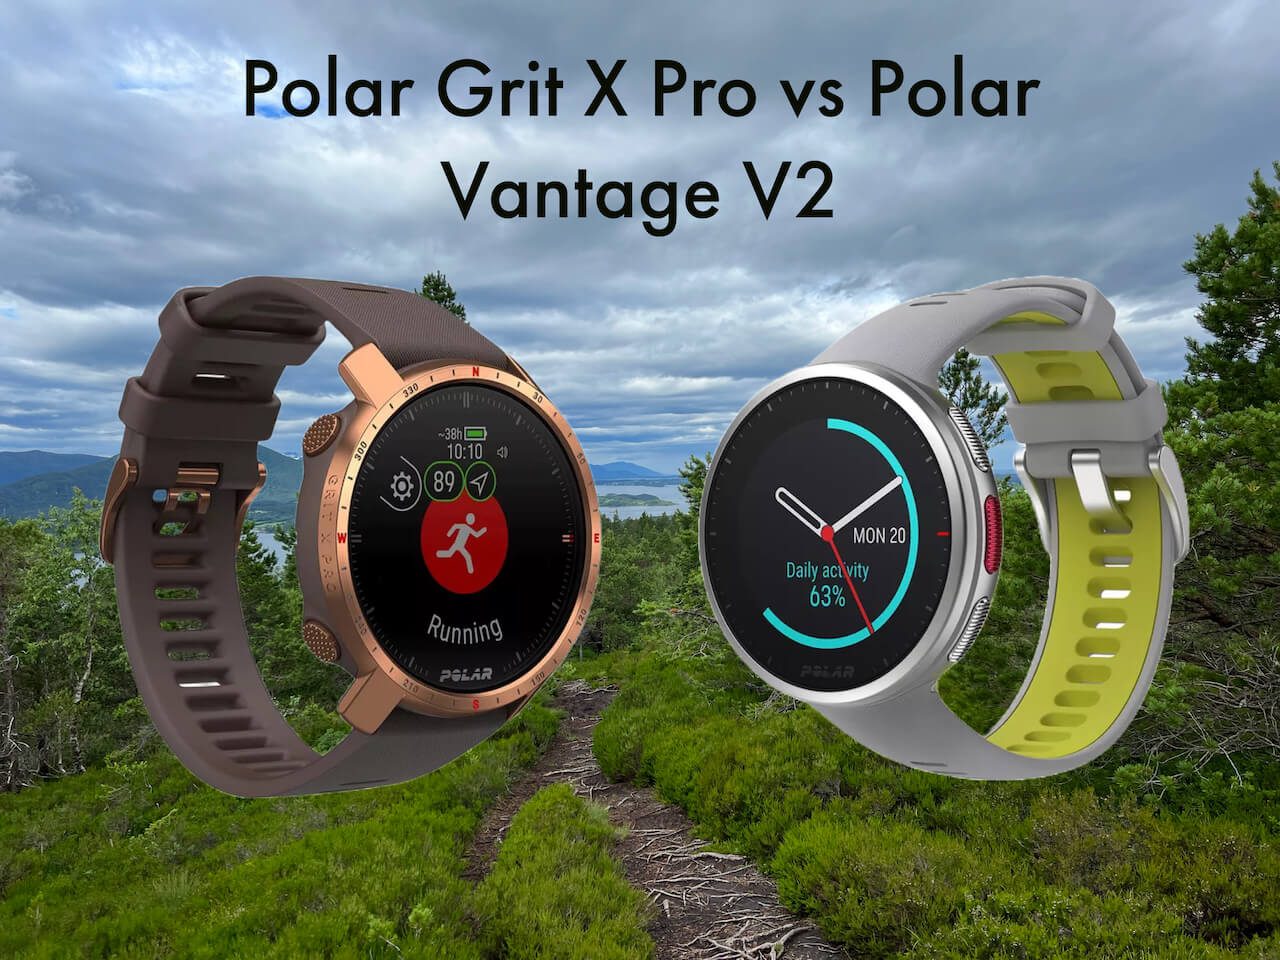 Polar Grit X Pro vs. Polar Vantage V2